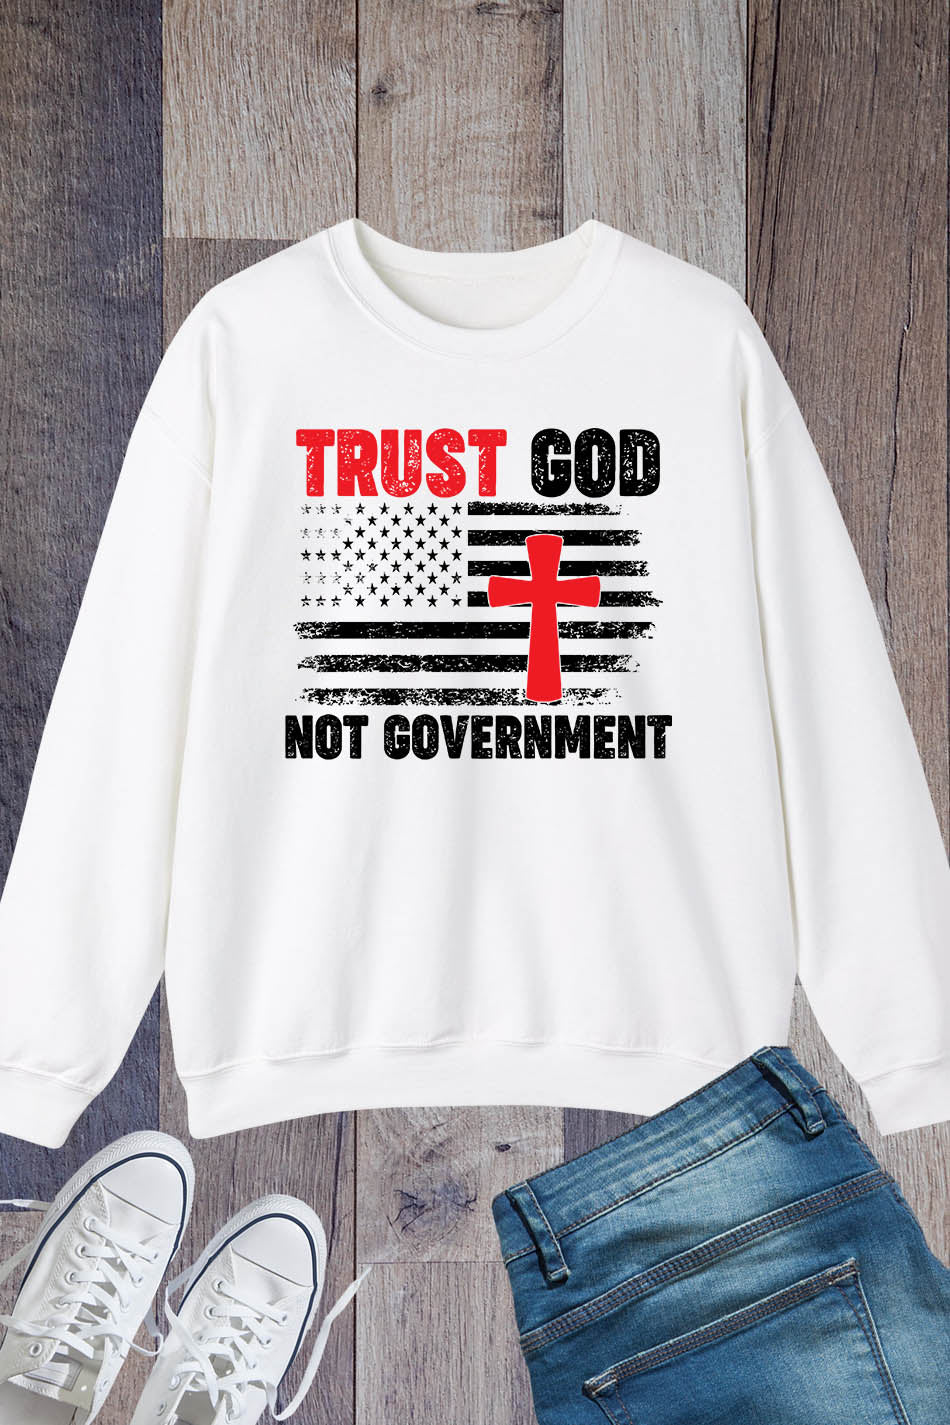 Trust God Not Government Political USA Flag Christian Sweatshirts